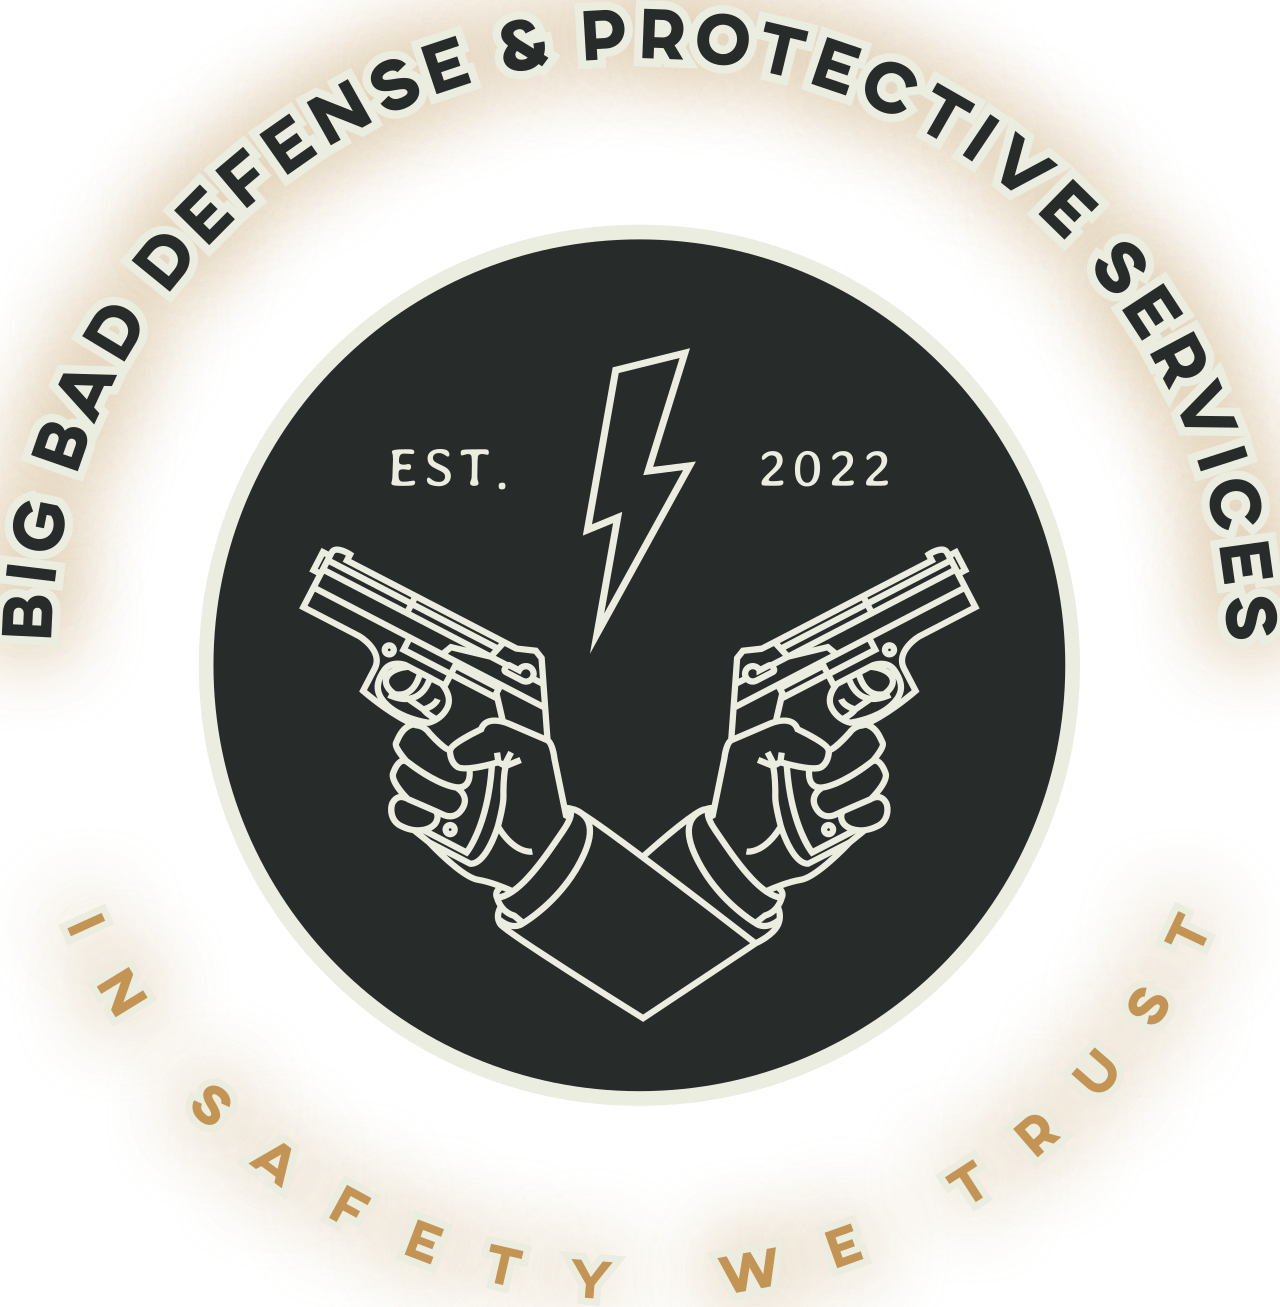 Big Bad Defense and Protective Services's logo